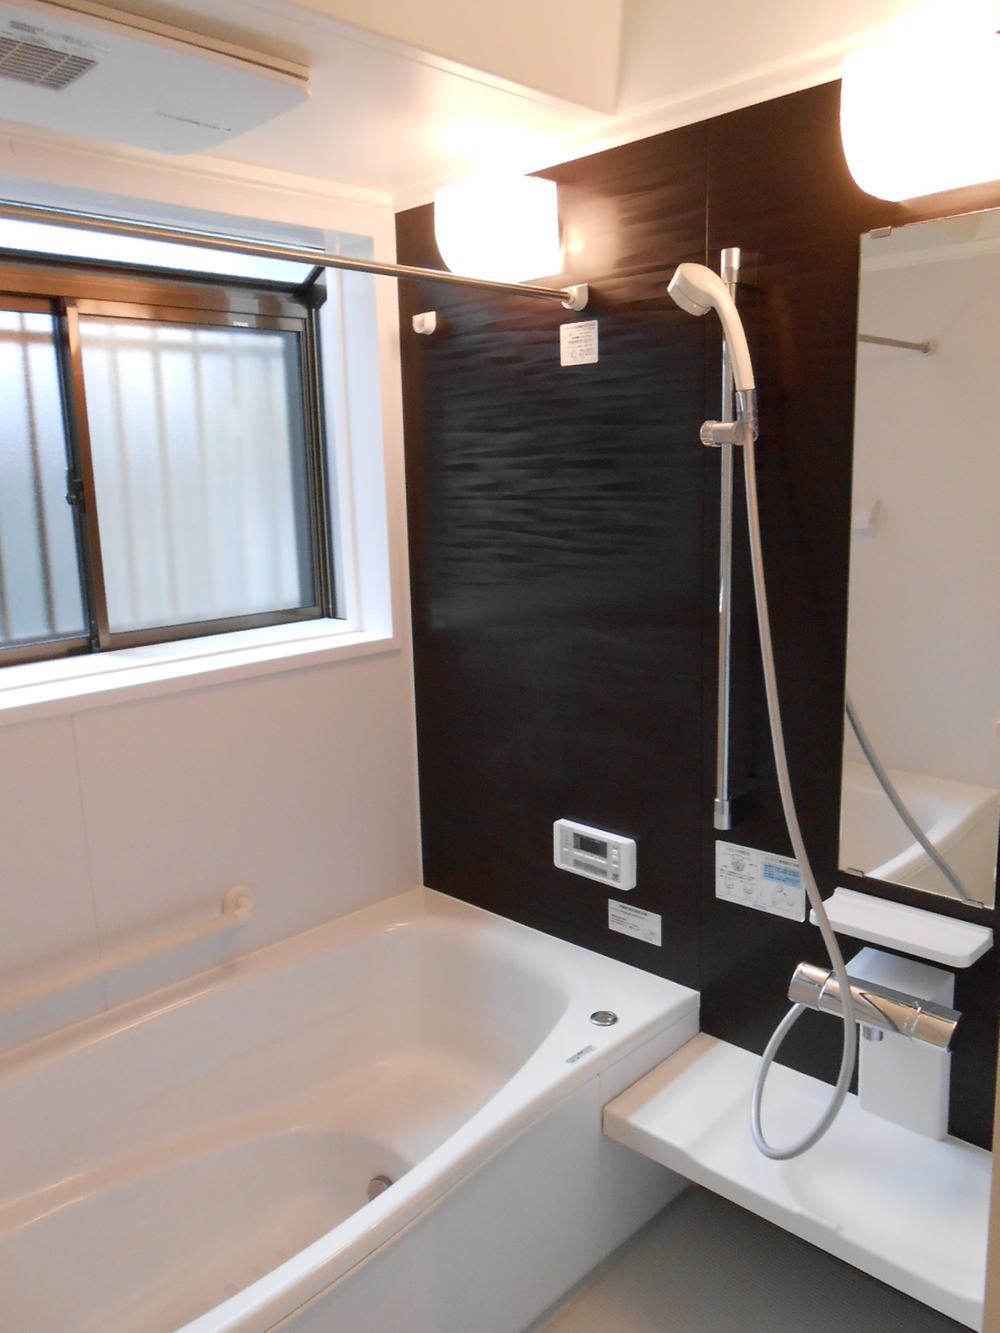 Bathroom. Adopt the latest unit bus with a bathroom ventilation dryer. 